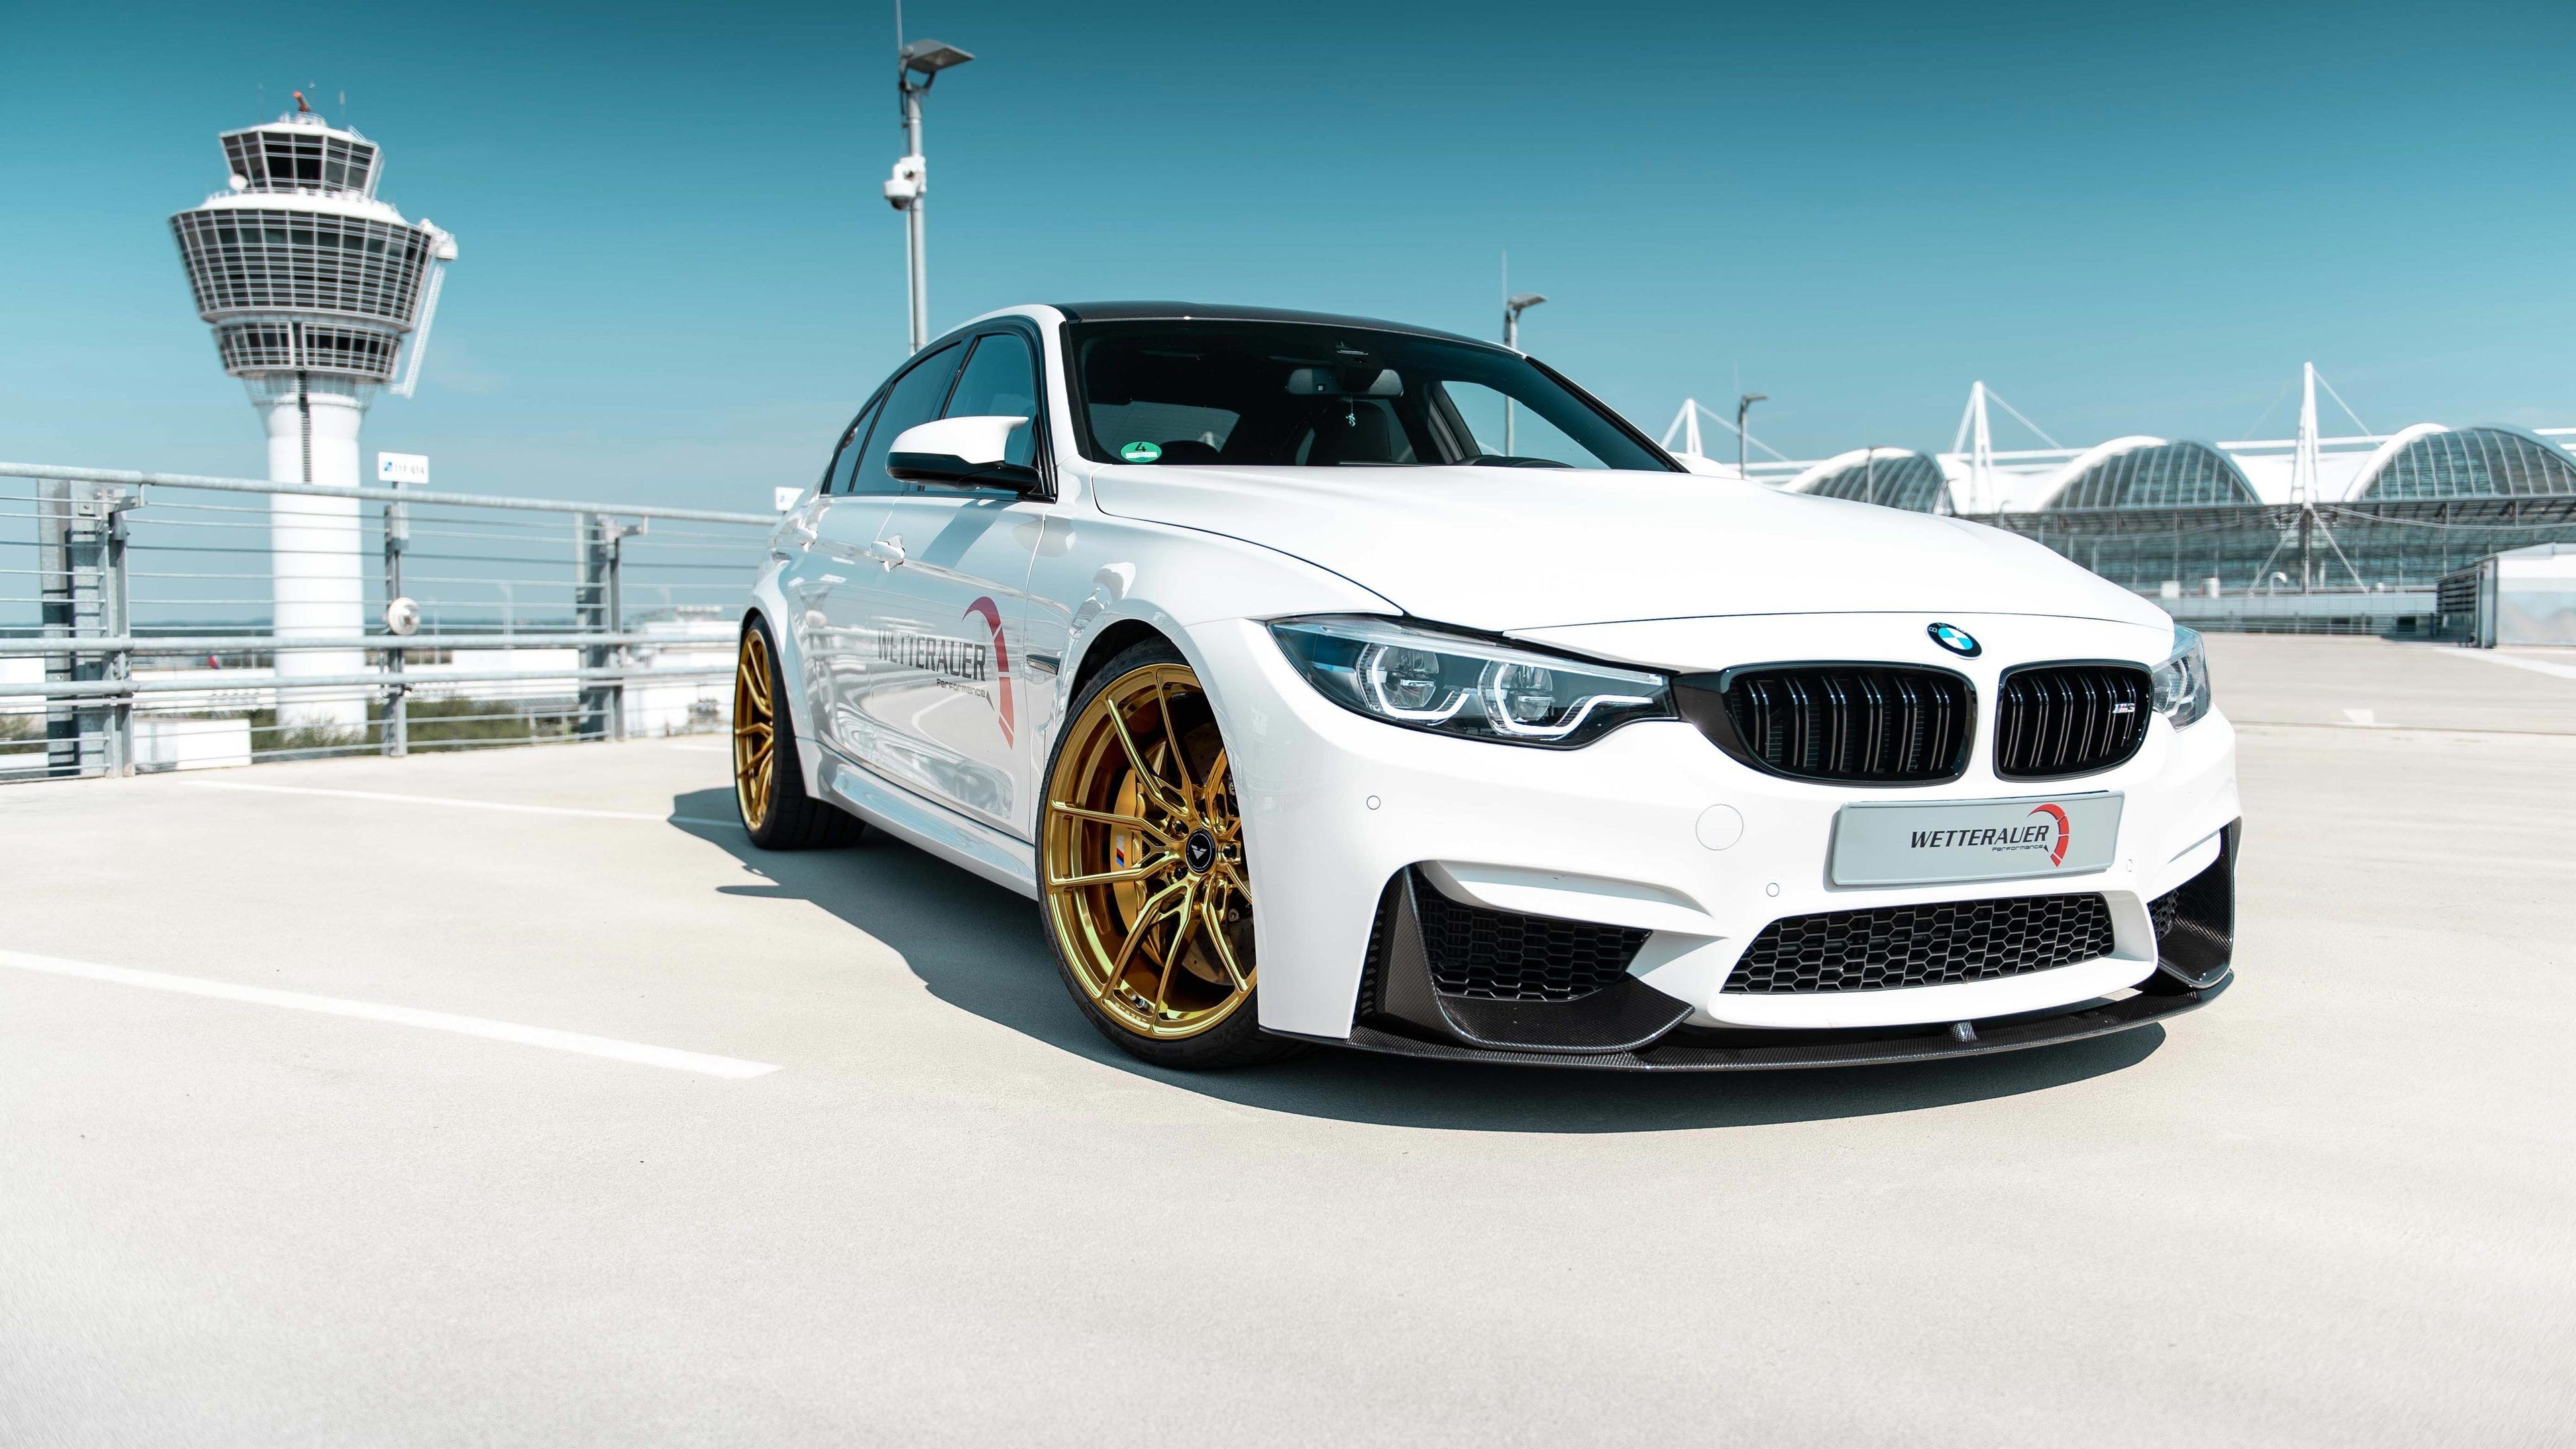 BMW M3 GTS, Wetterauer Performance edition, 4K resolution wallpaper, Automotive elegance, 3840x2160 4K Desktop